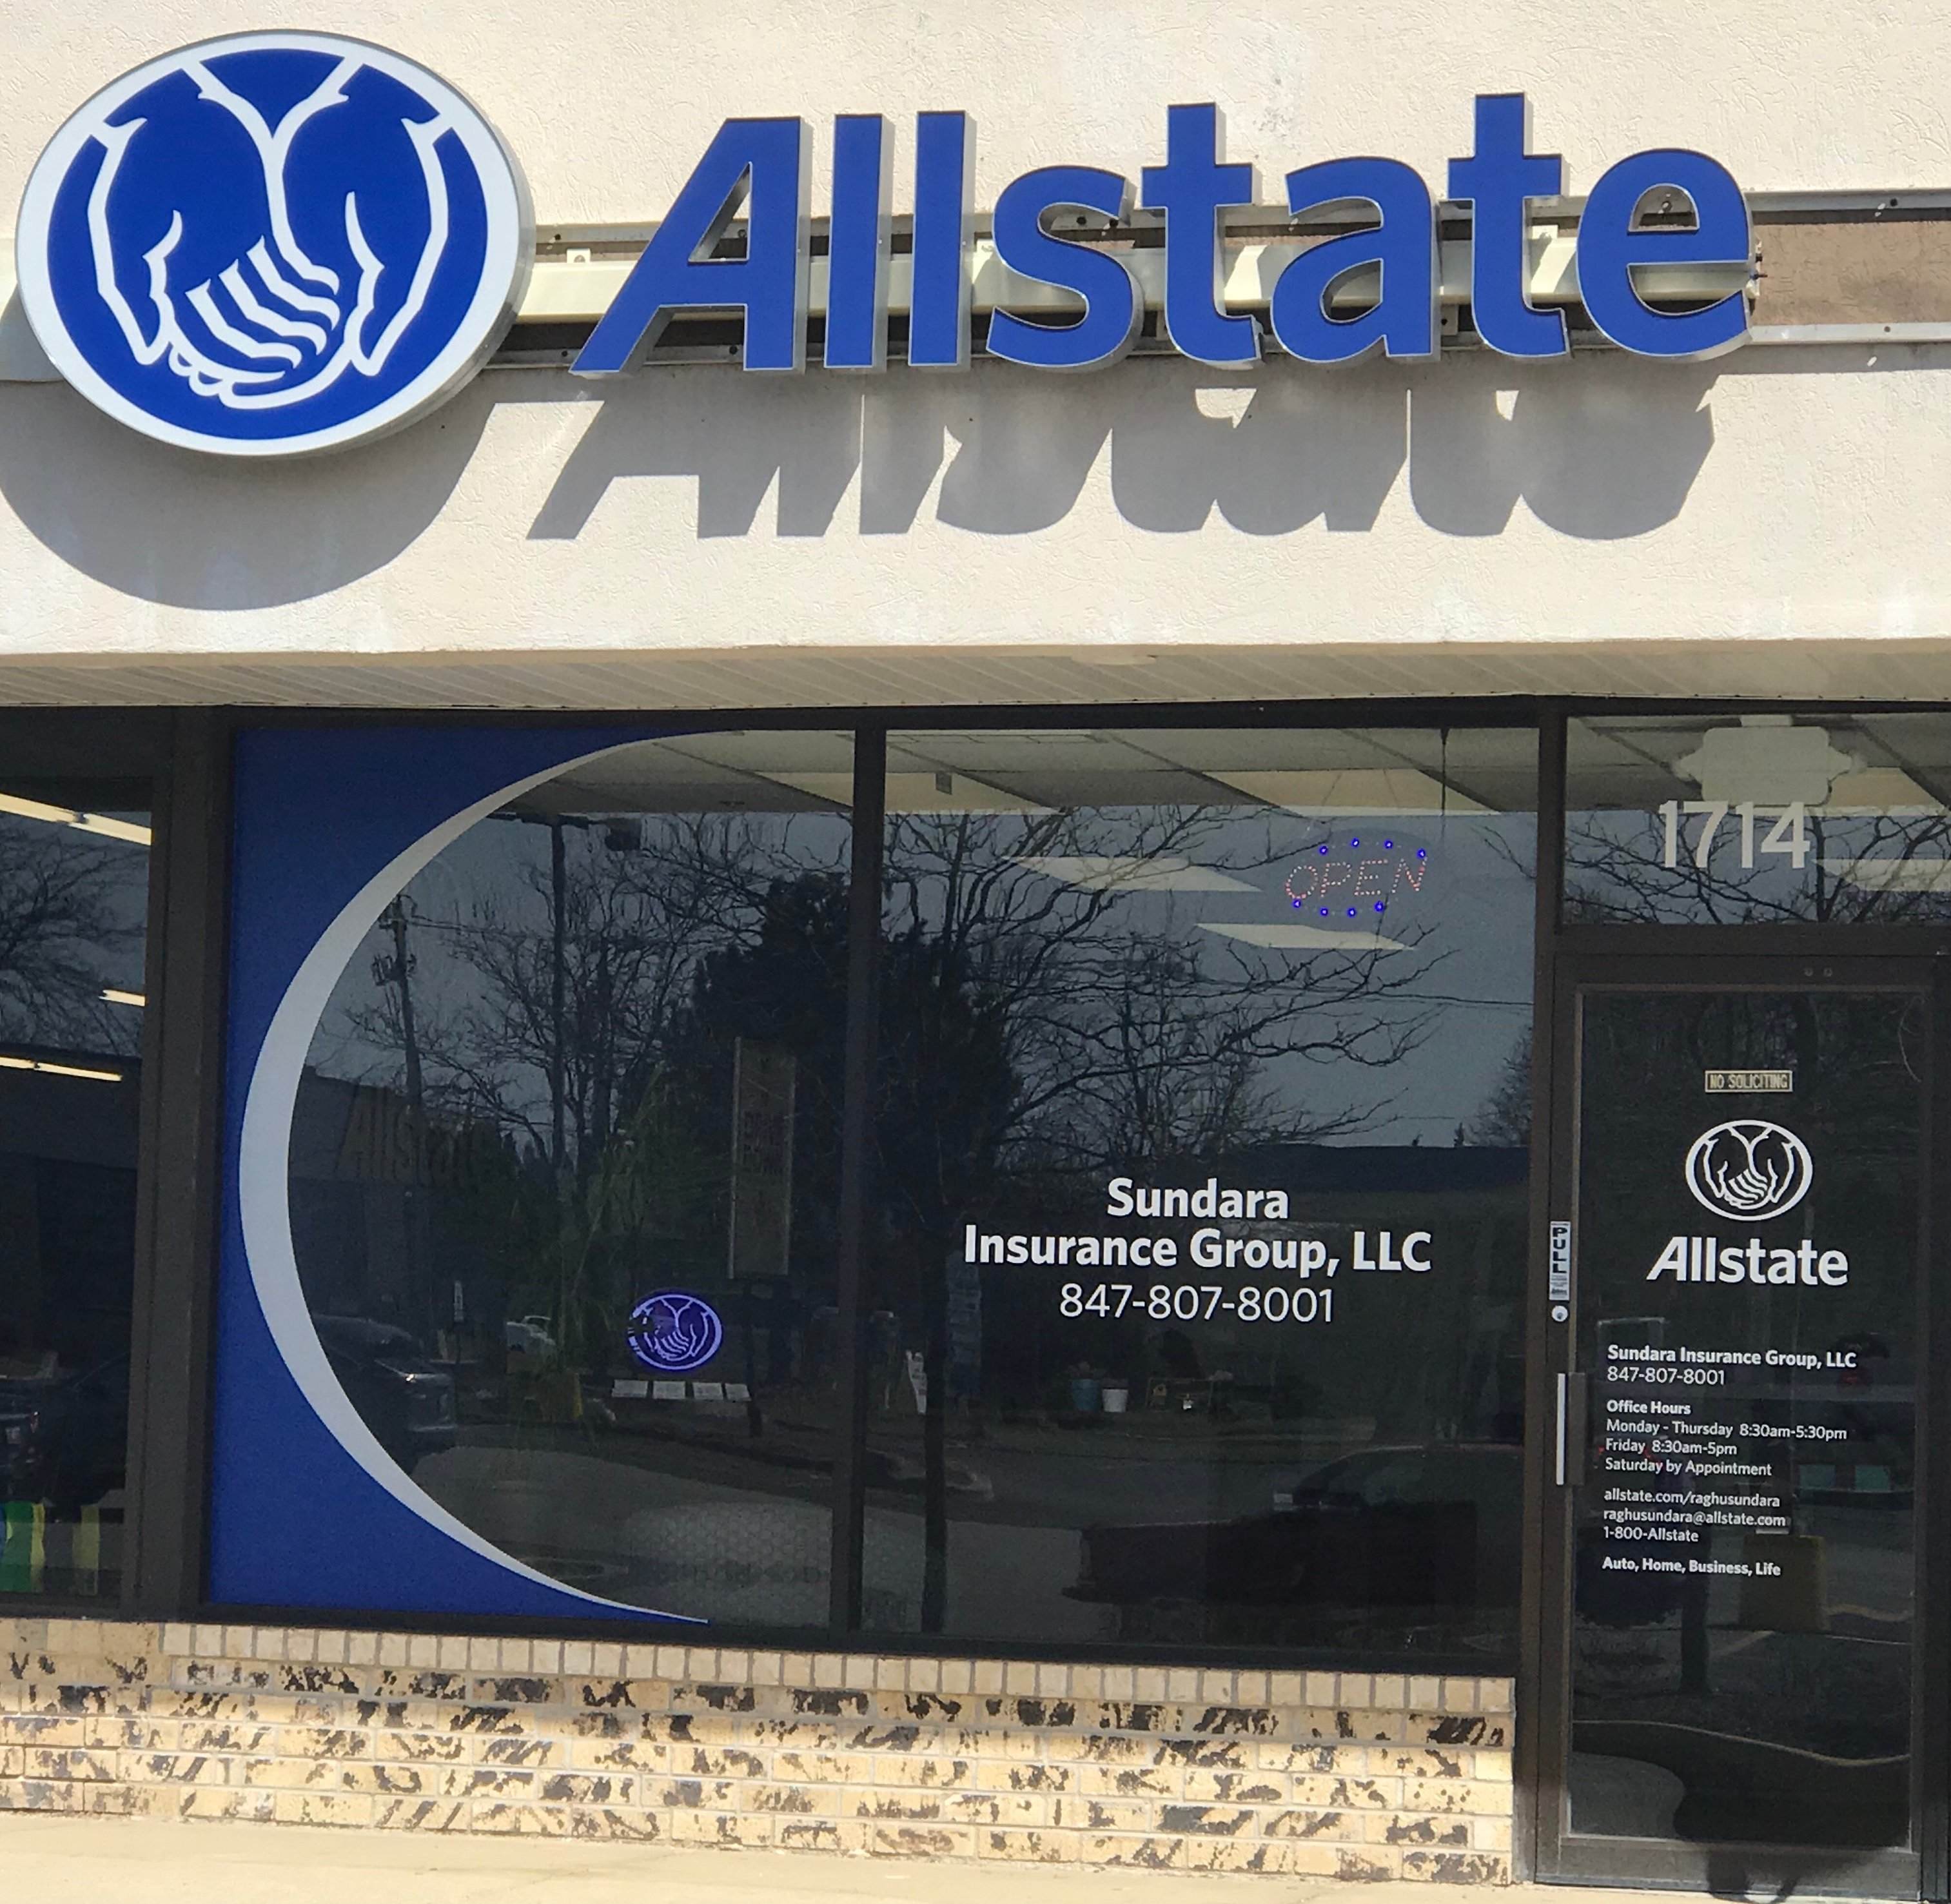 Allstate | Car Insurance in Hoffman Estates, IL - Sundara Insurance Group LLC